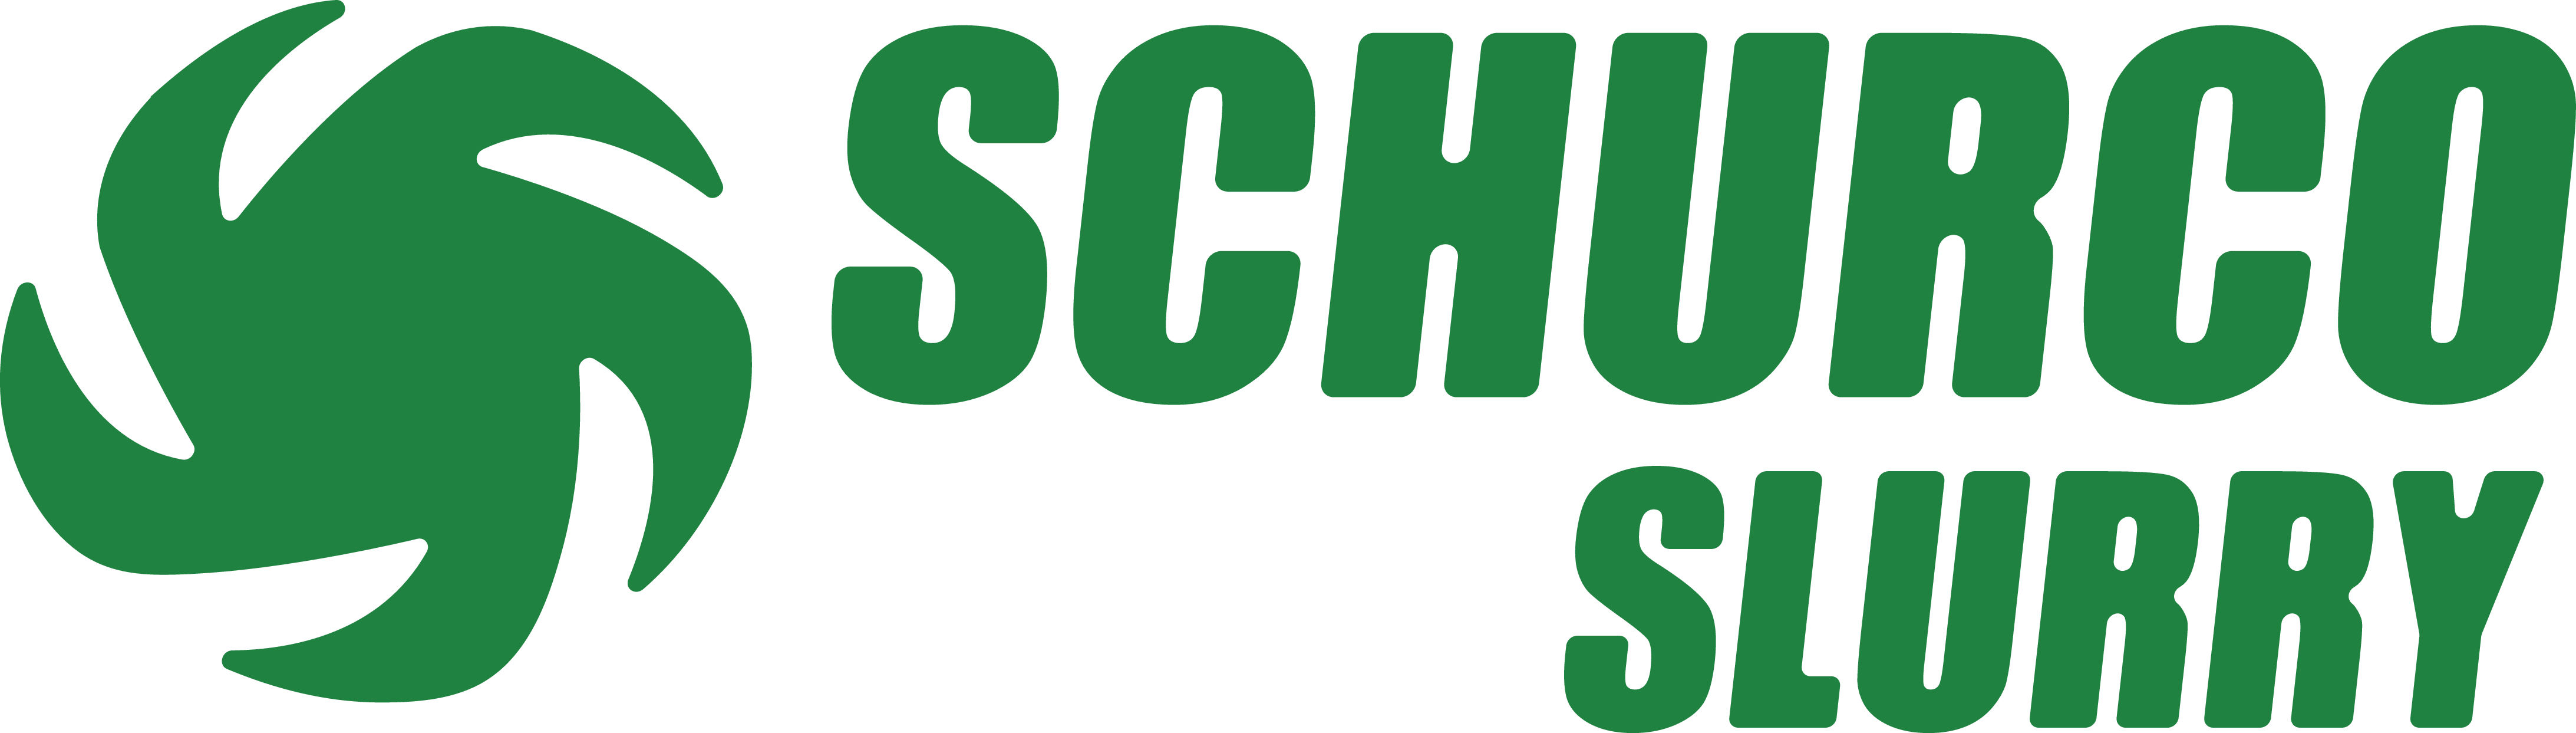 Schurco Slurry logo